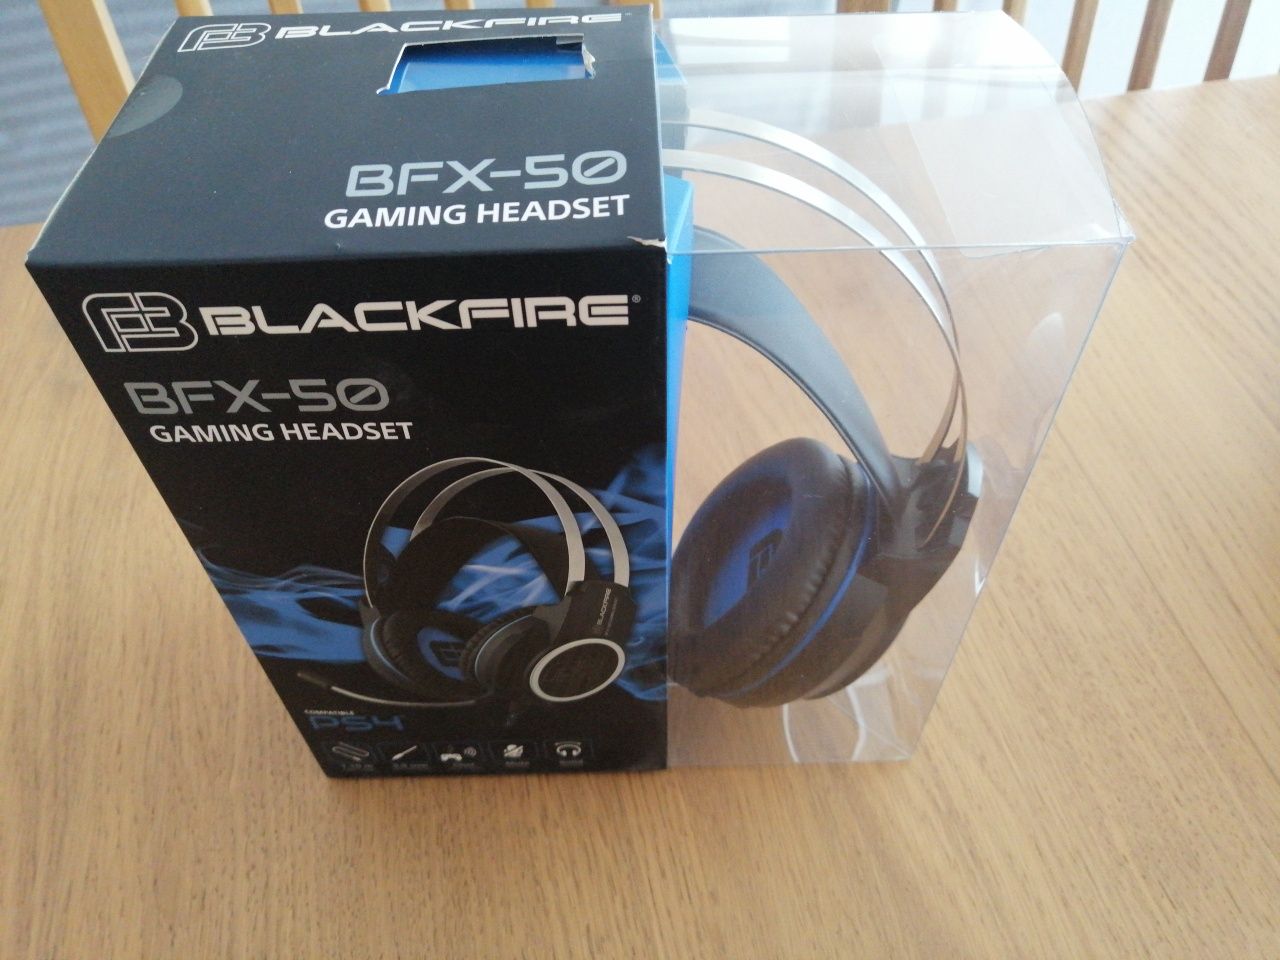 Auscultadores Blackfire BFX-50 Gaming Headset ps4